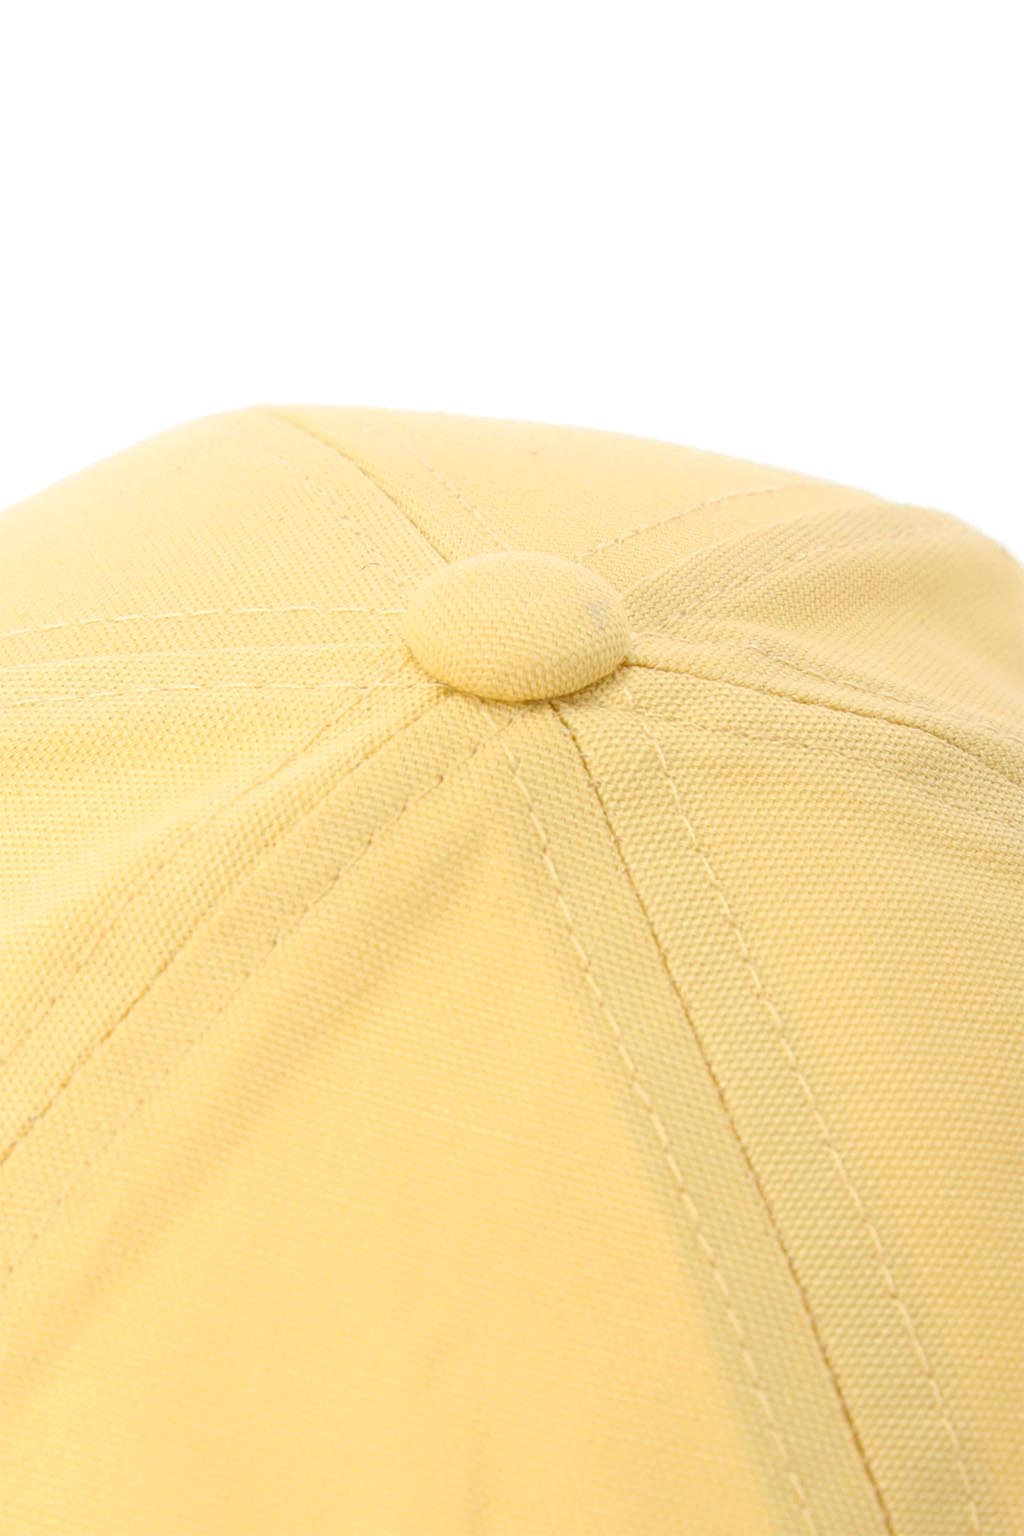 embroidery-center-logo-cap-sand-yellow-13